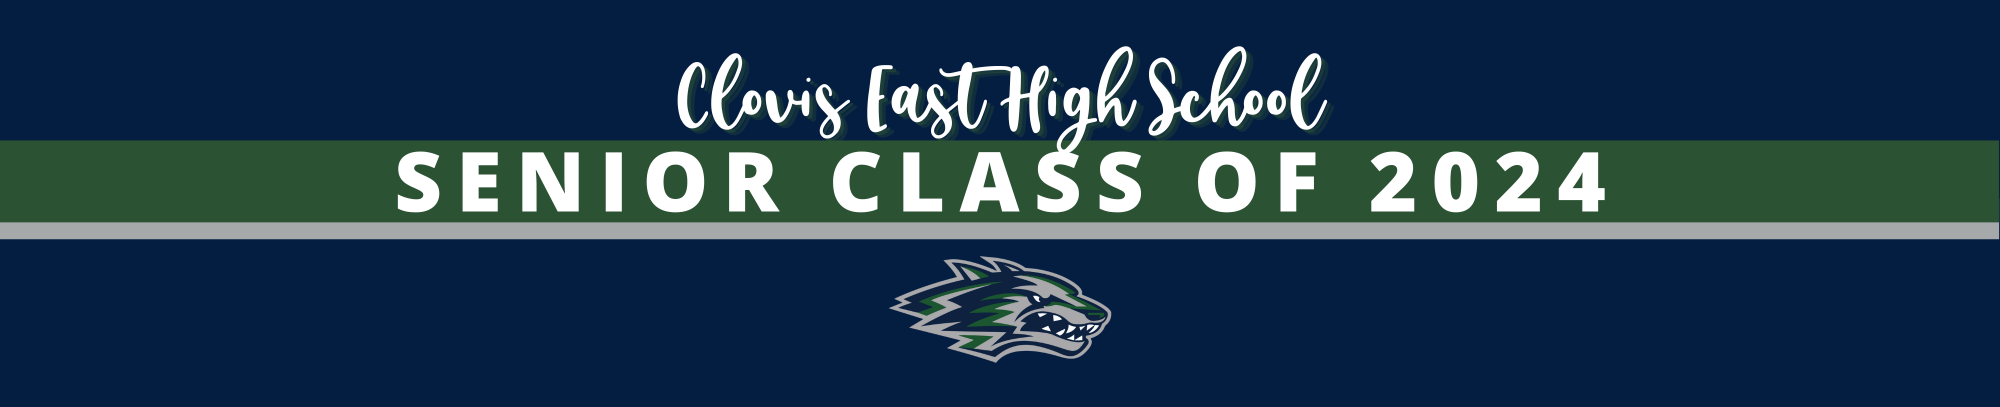 Clovis East High School - Senior Class of 2024